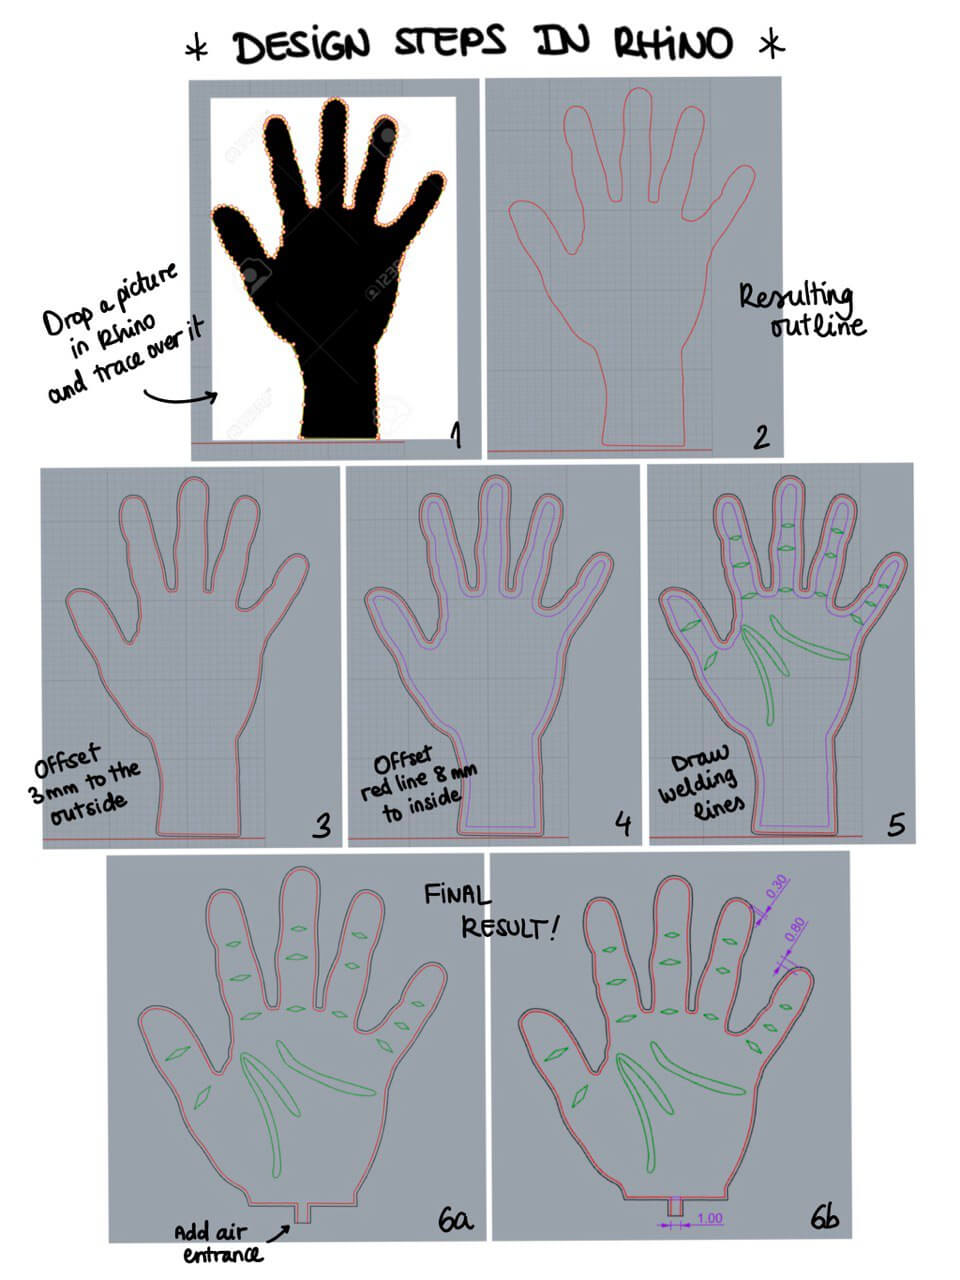 Steps to design a TPU hand inflatable